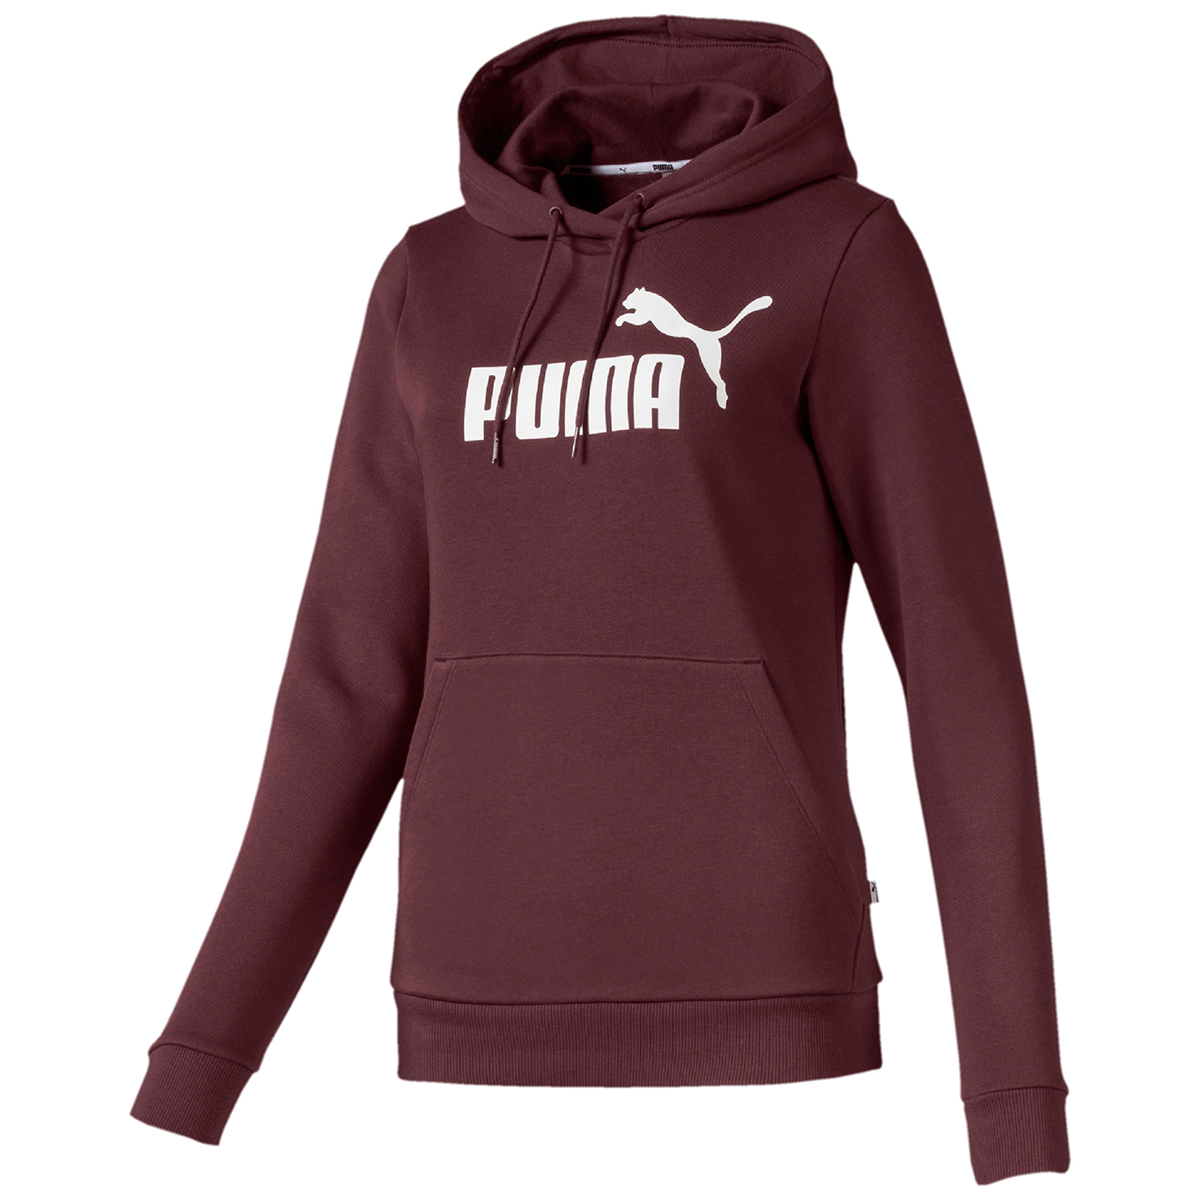 Puma Women's Essential Fleece Hoodie - Red, XL